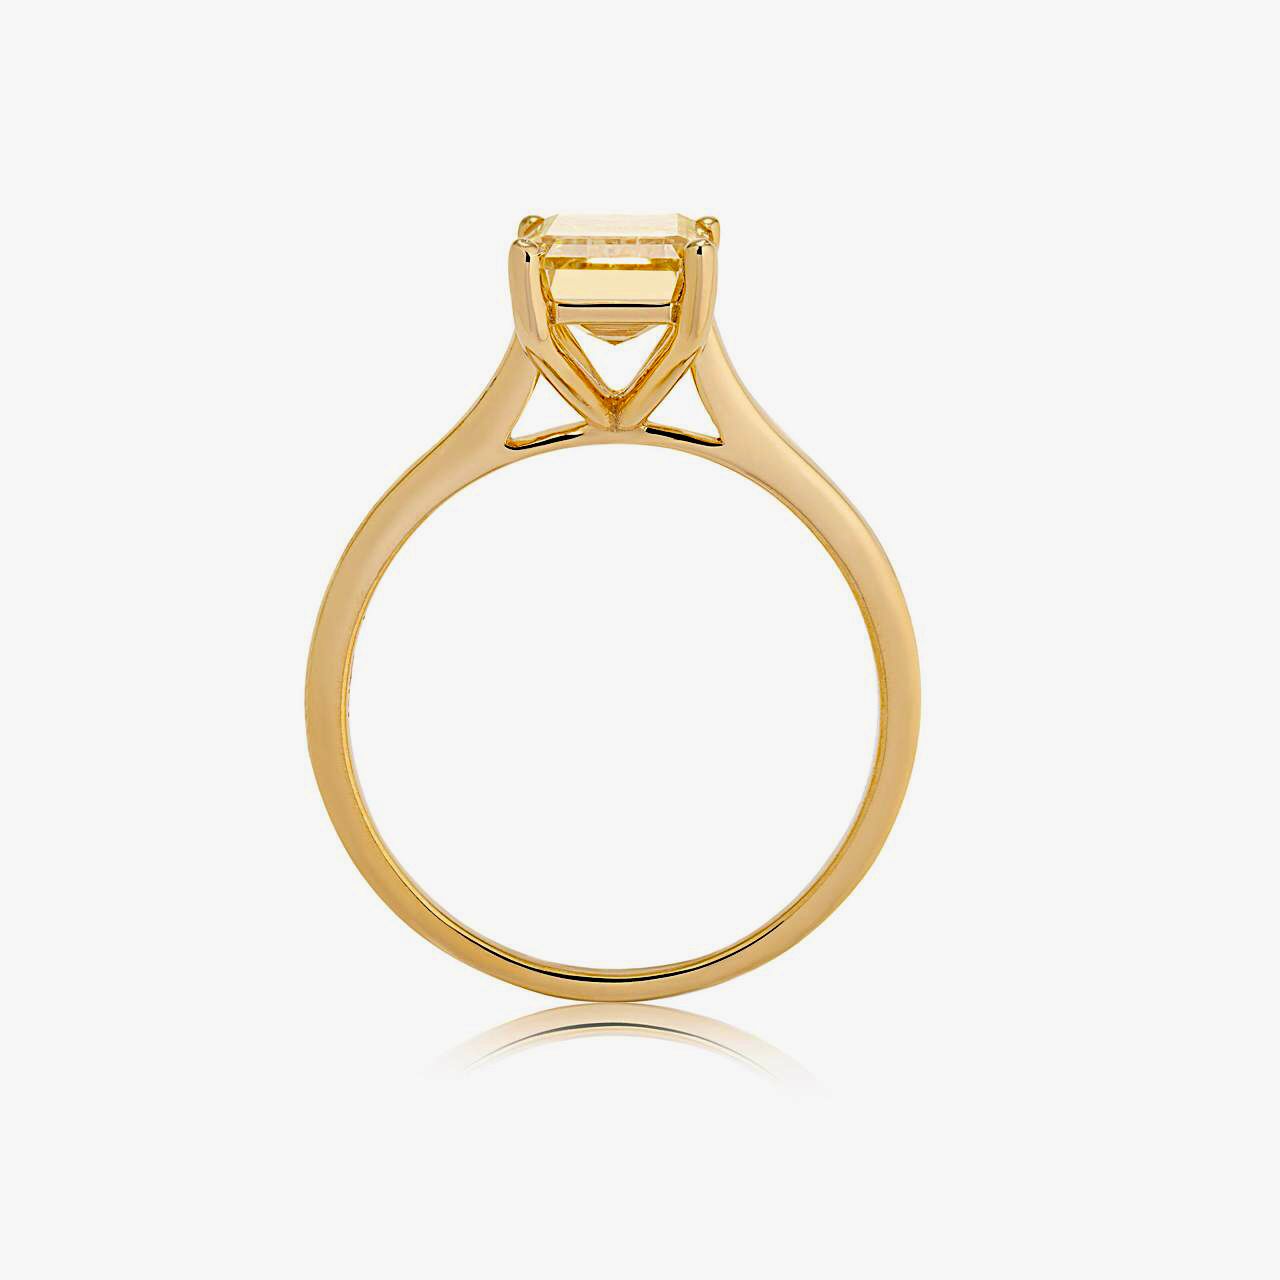 Fancy Intense Yellow Emerald Cut 2.50Ct Diamond Ring VS1 Clarity 18kt Yellow Gold - GCI Certified - Image 3 of 4